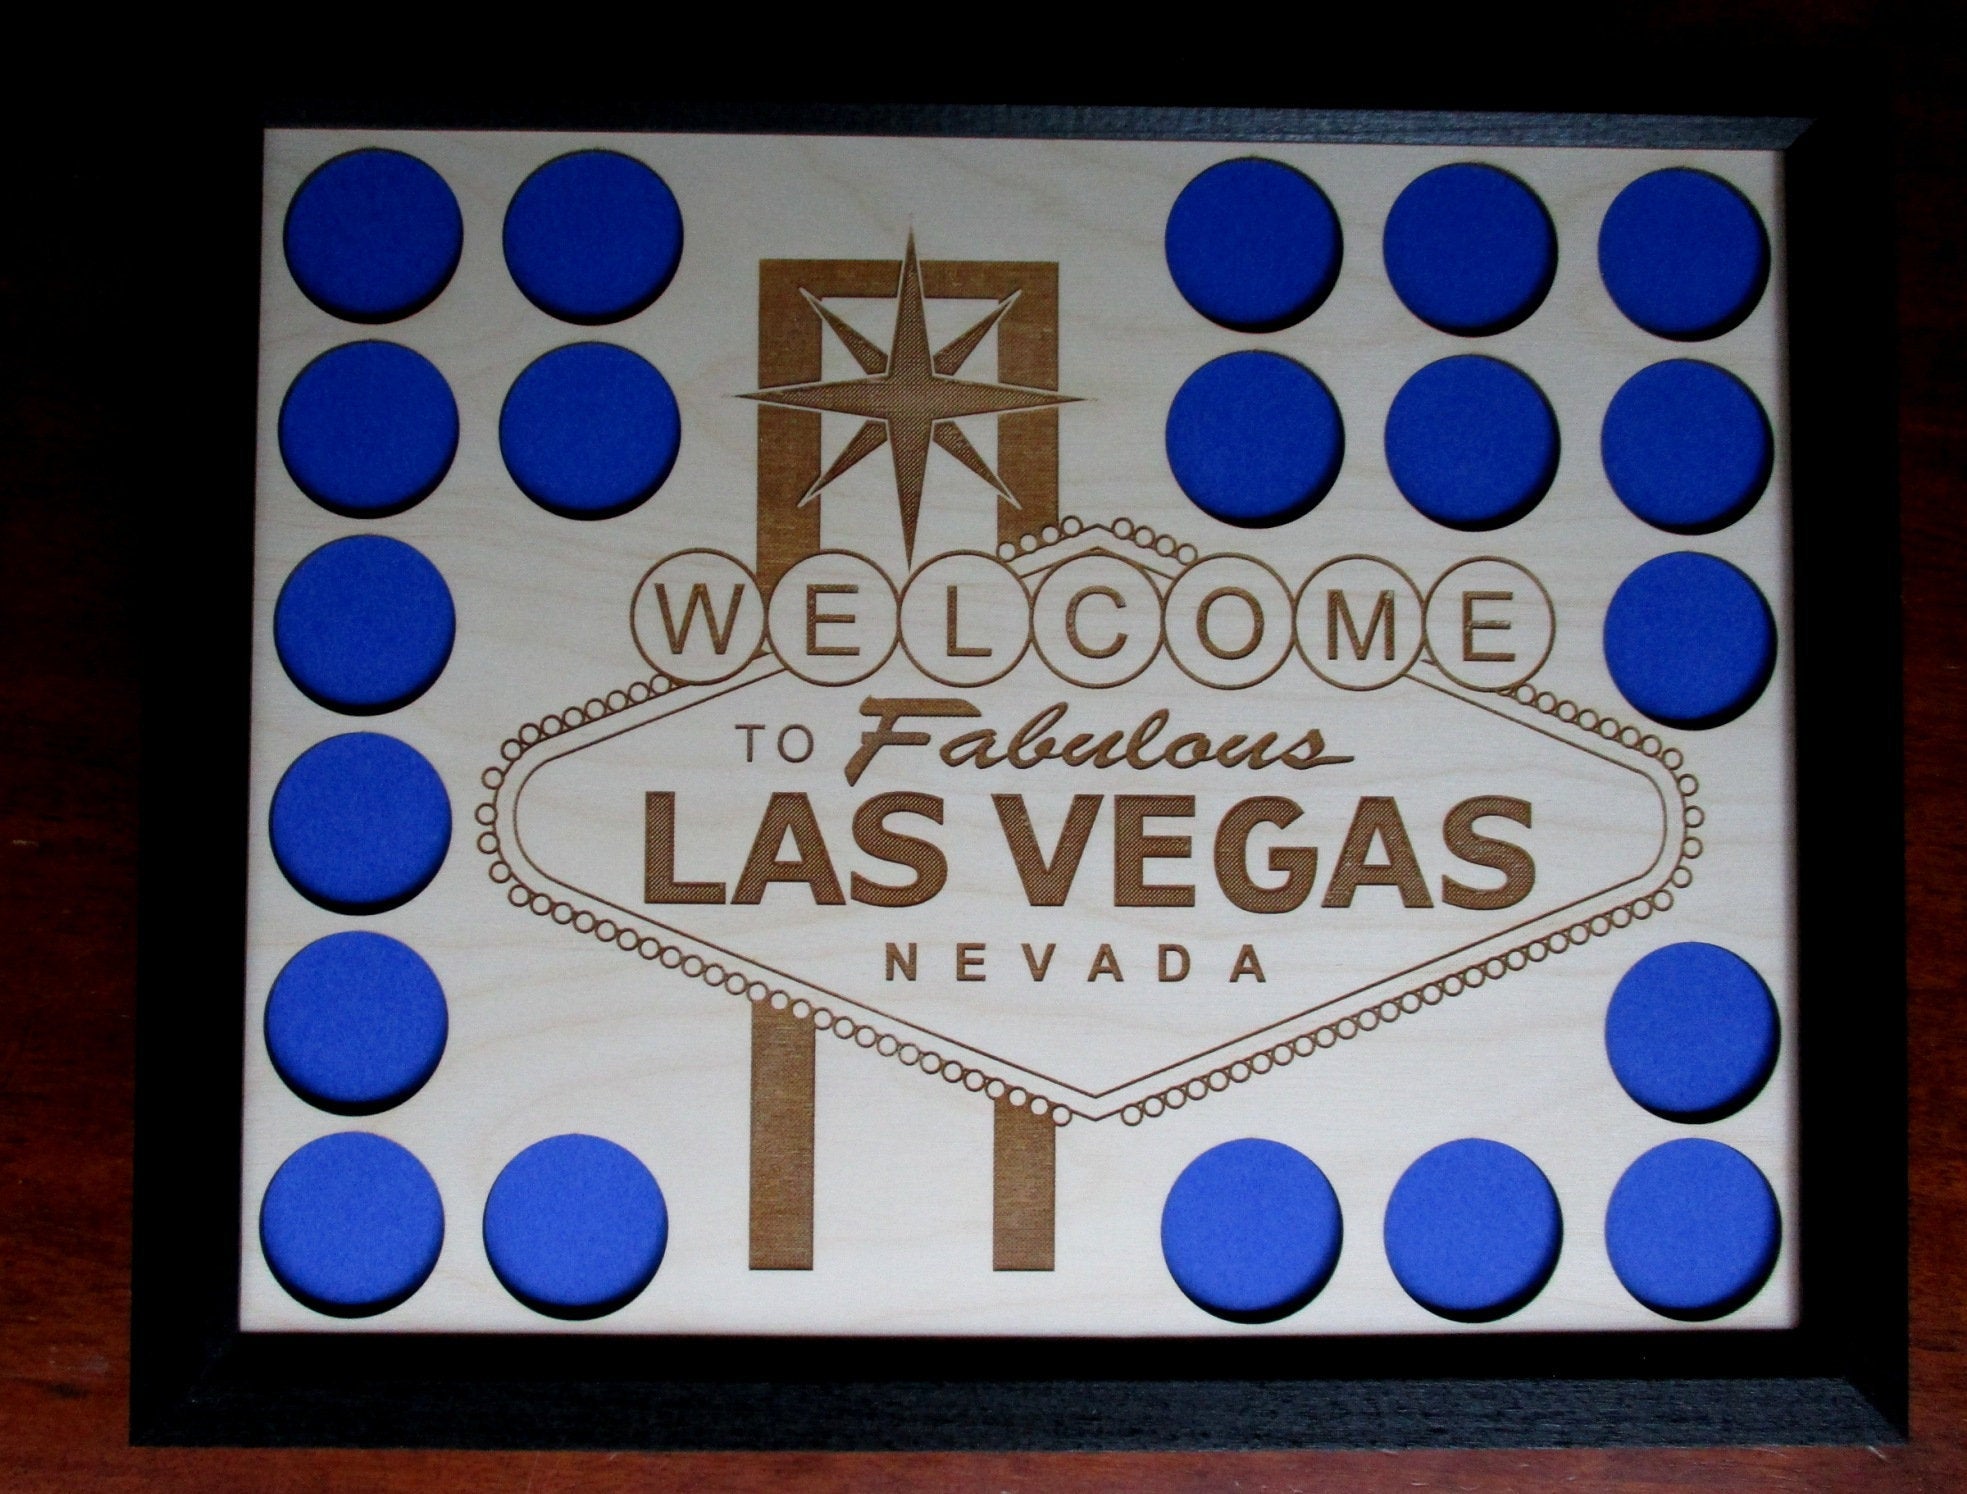 Casino Chips Las Vegas Poker Dice Gambling Car Bumper Vinyl